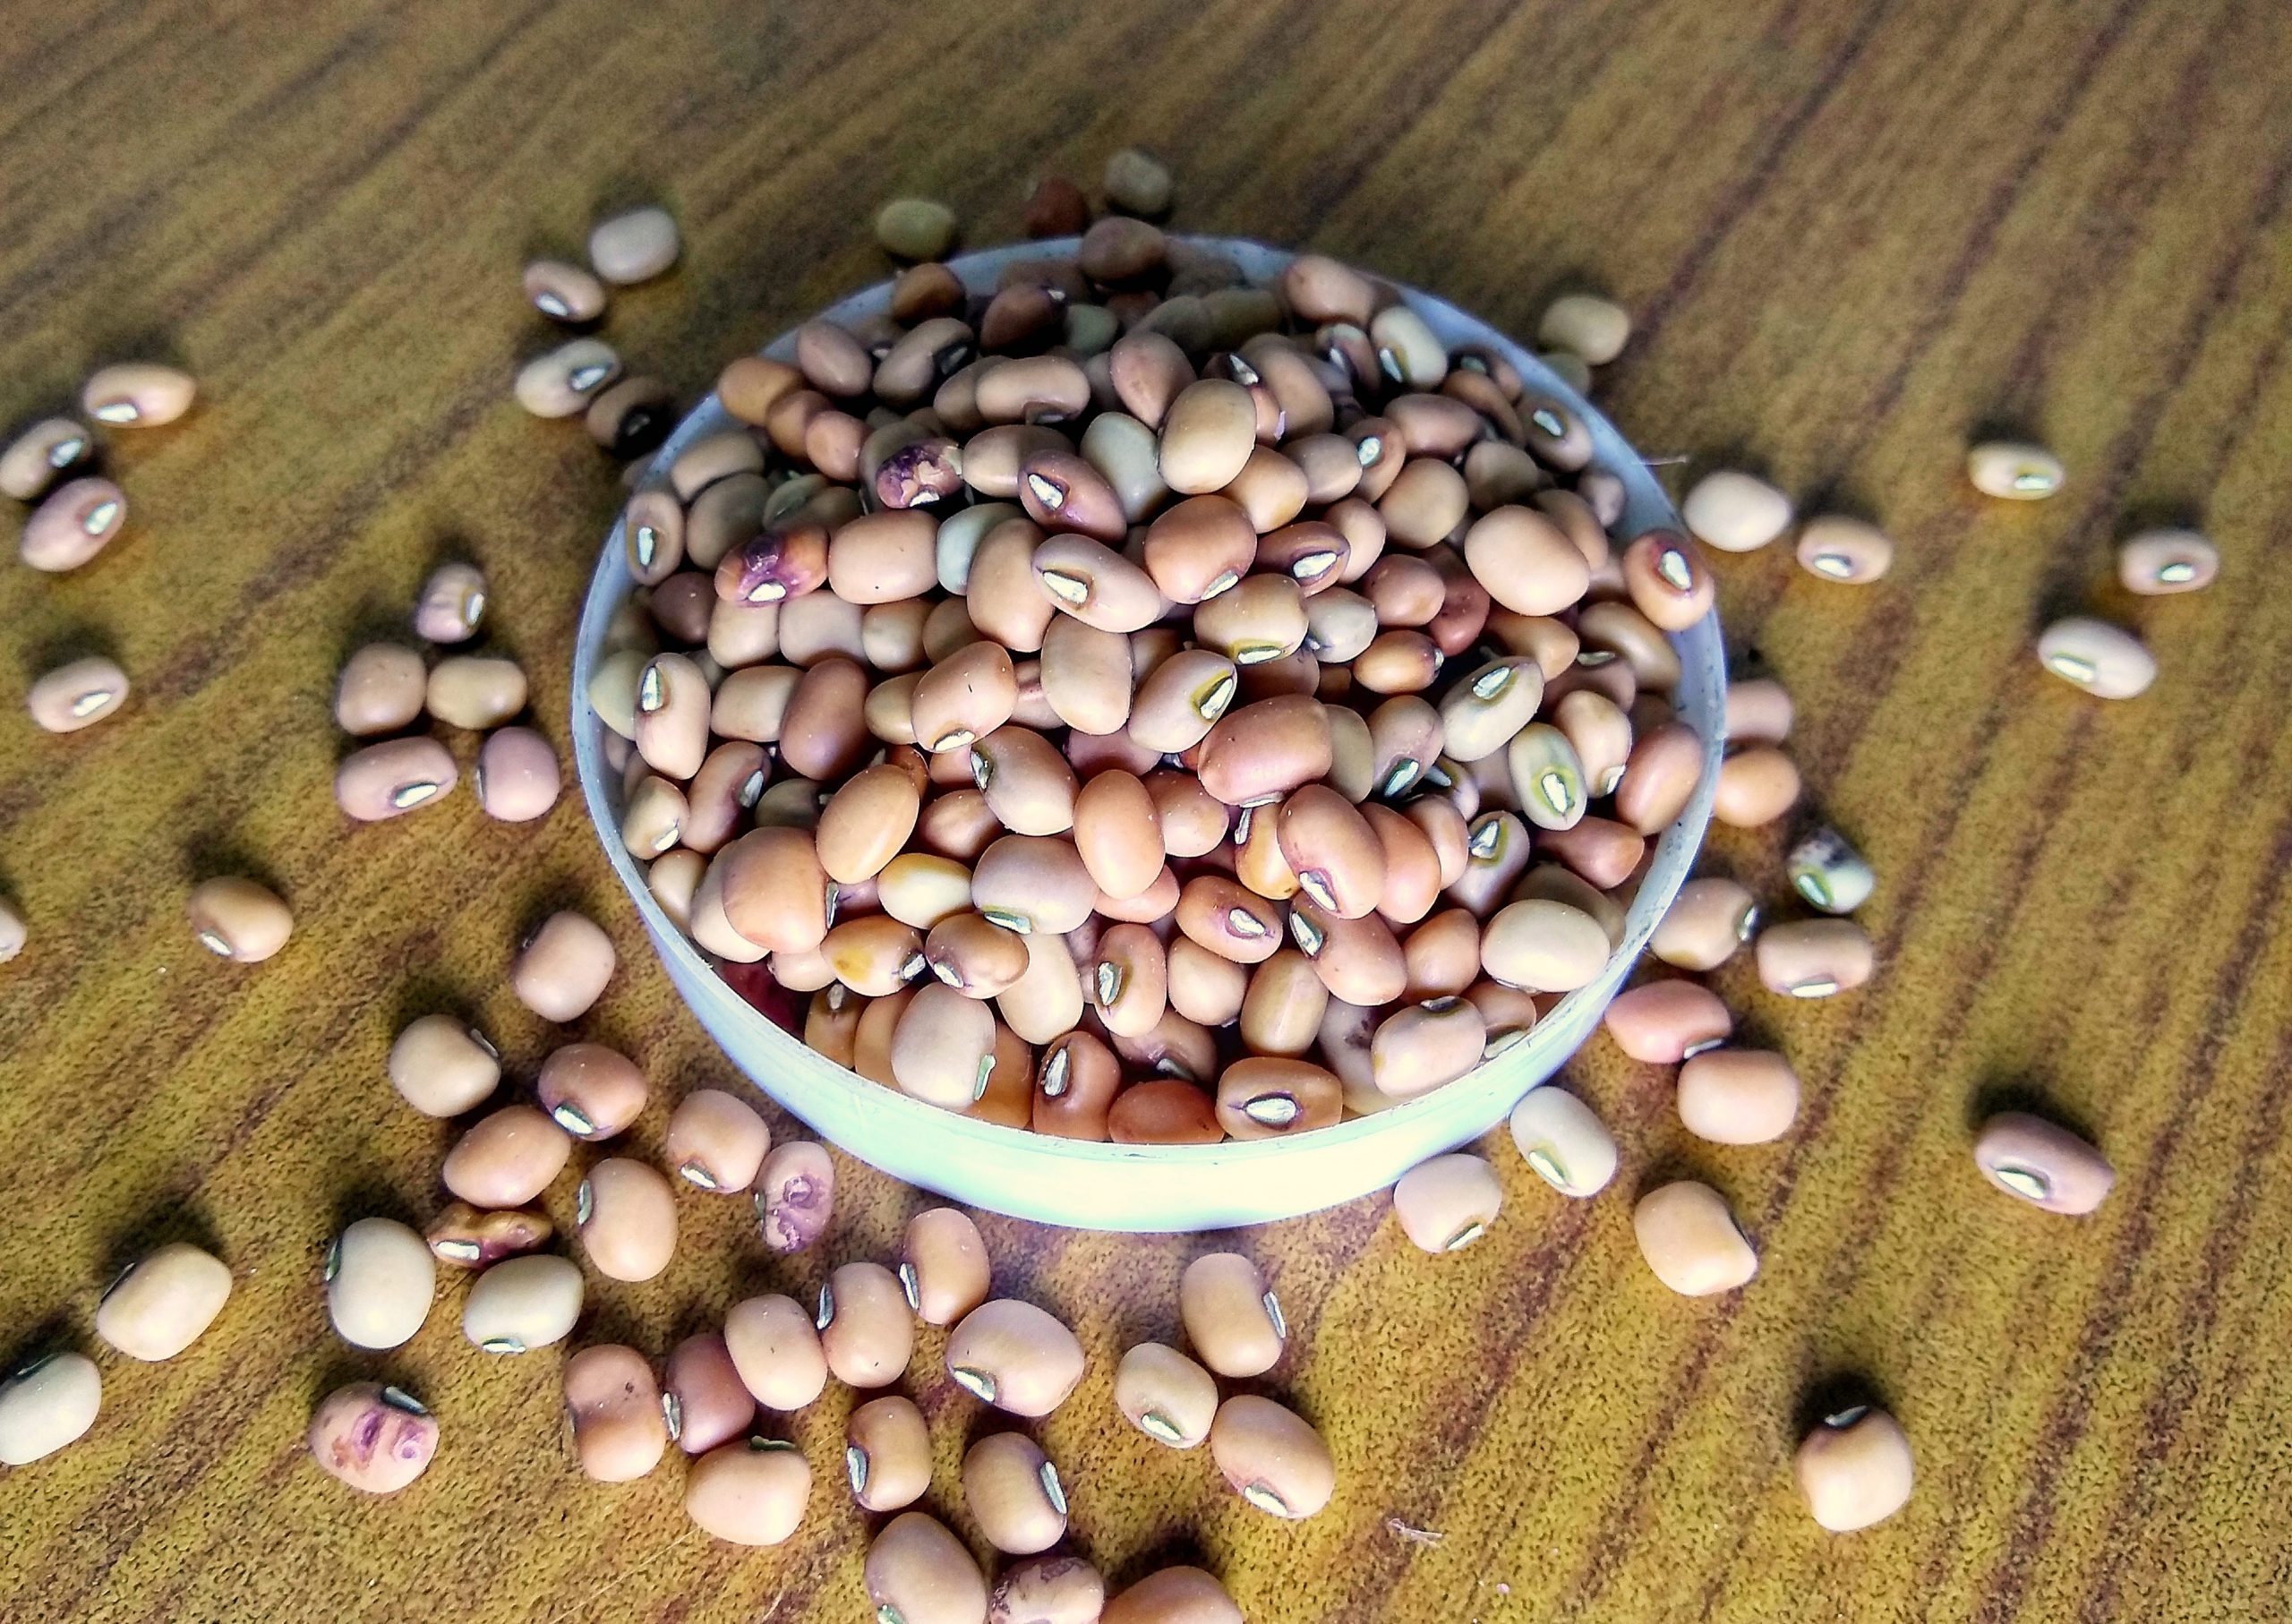 Common bean seeds